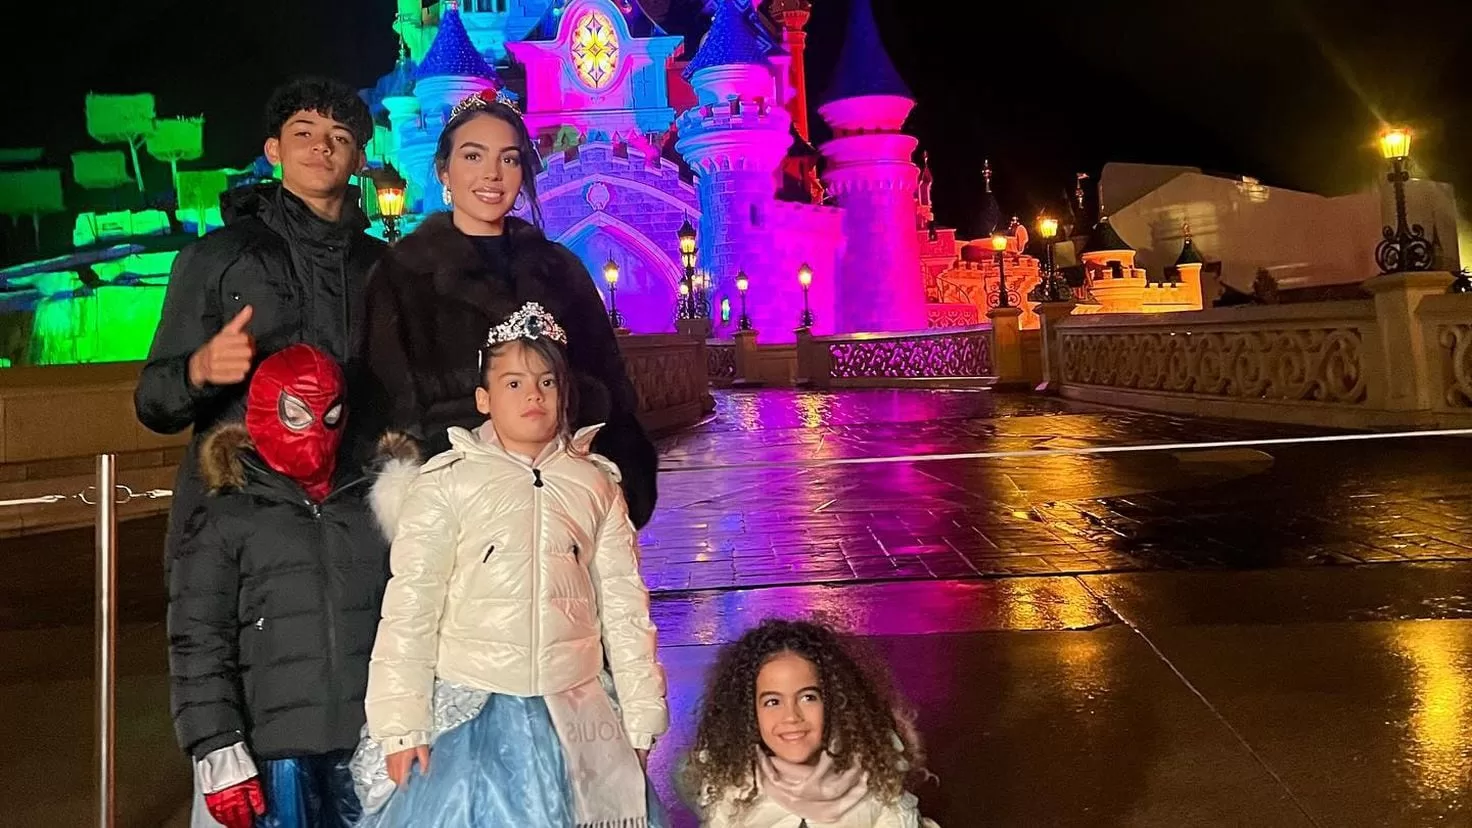 Georgina's vacation without Cristiano at Disneyland
